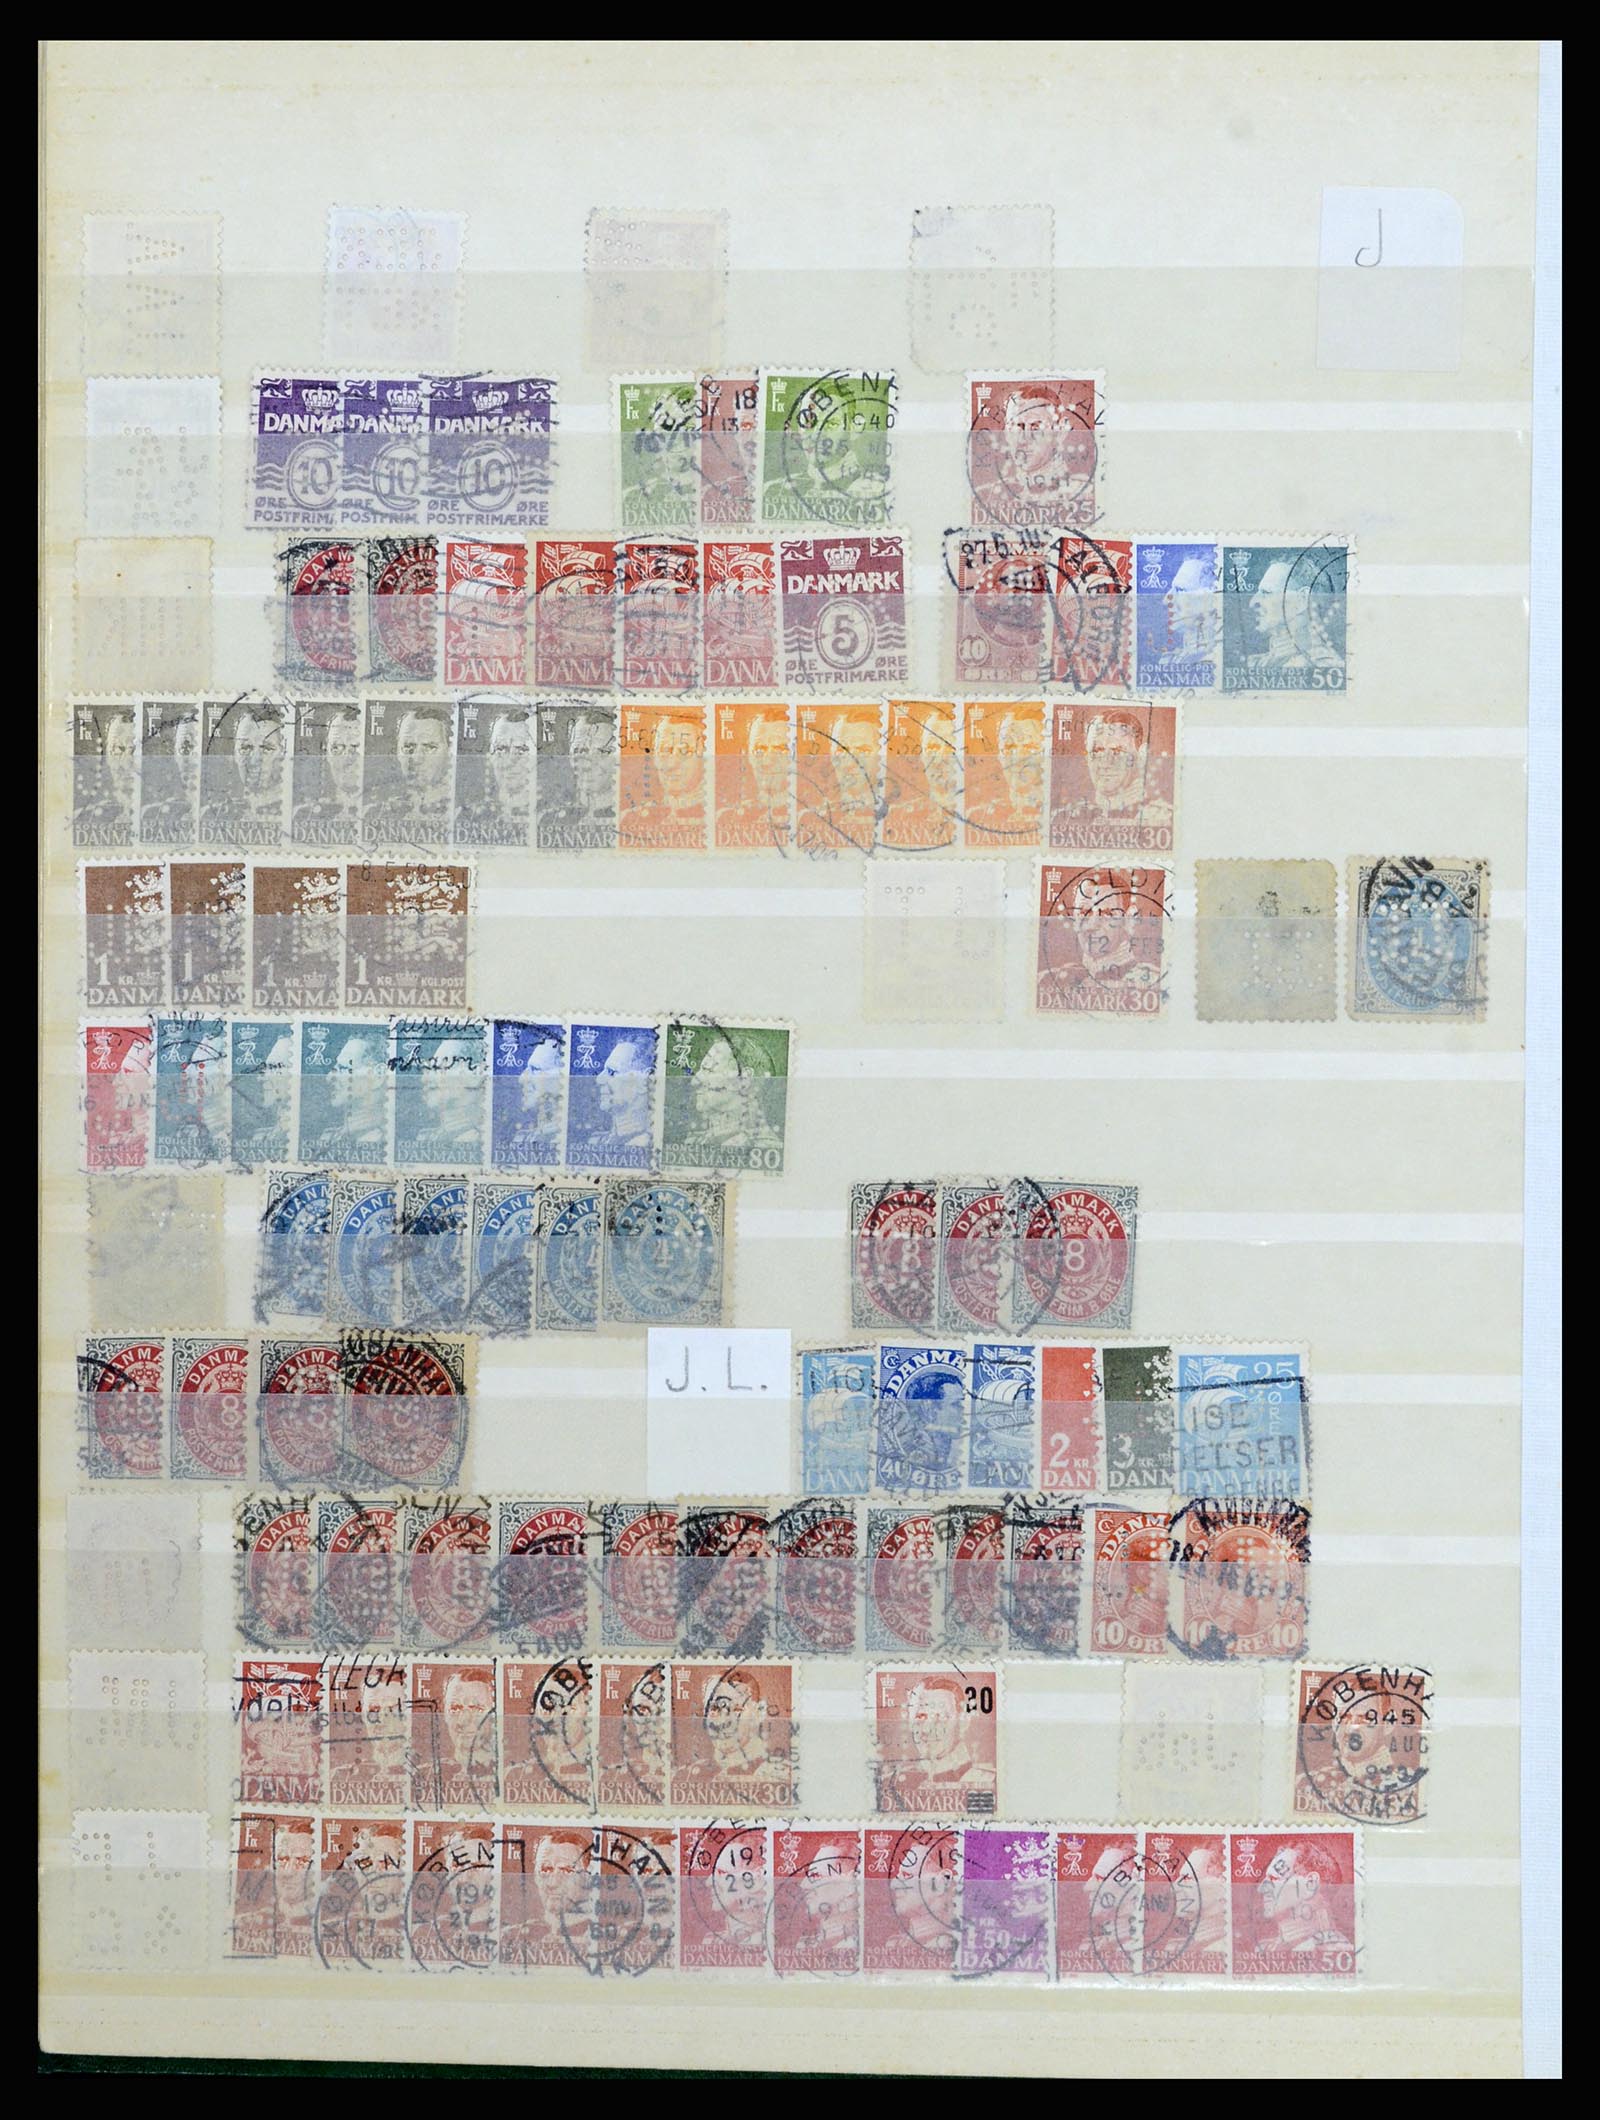 37056 078 - Stamp collection 37056 Denmark perfins.